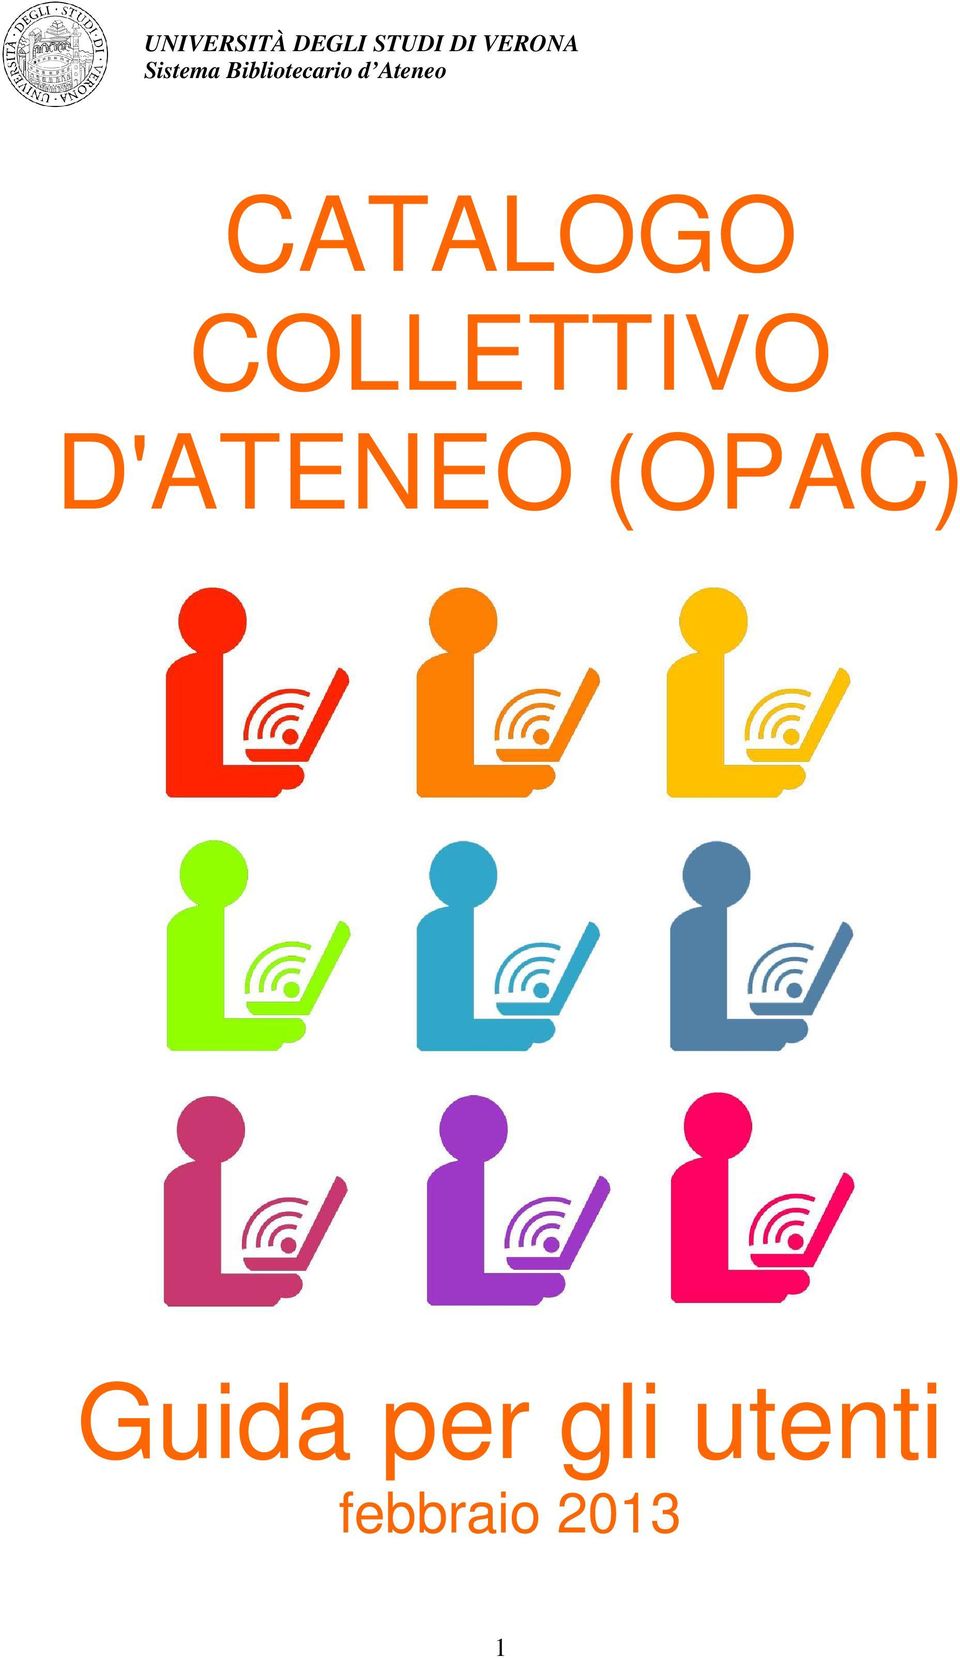 D'ATENEO (OPAC)